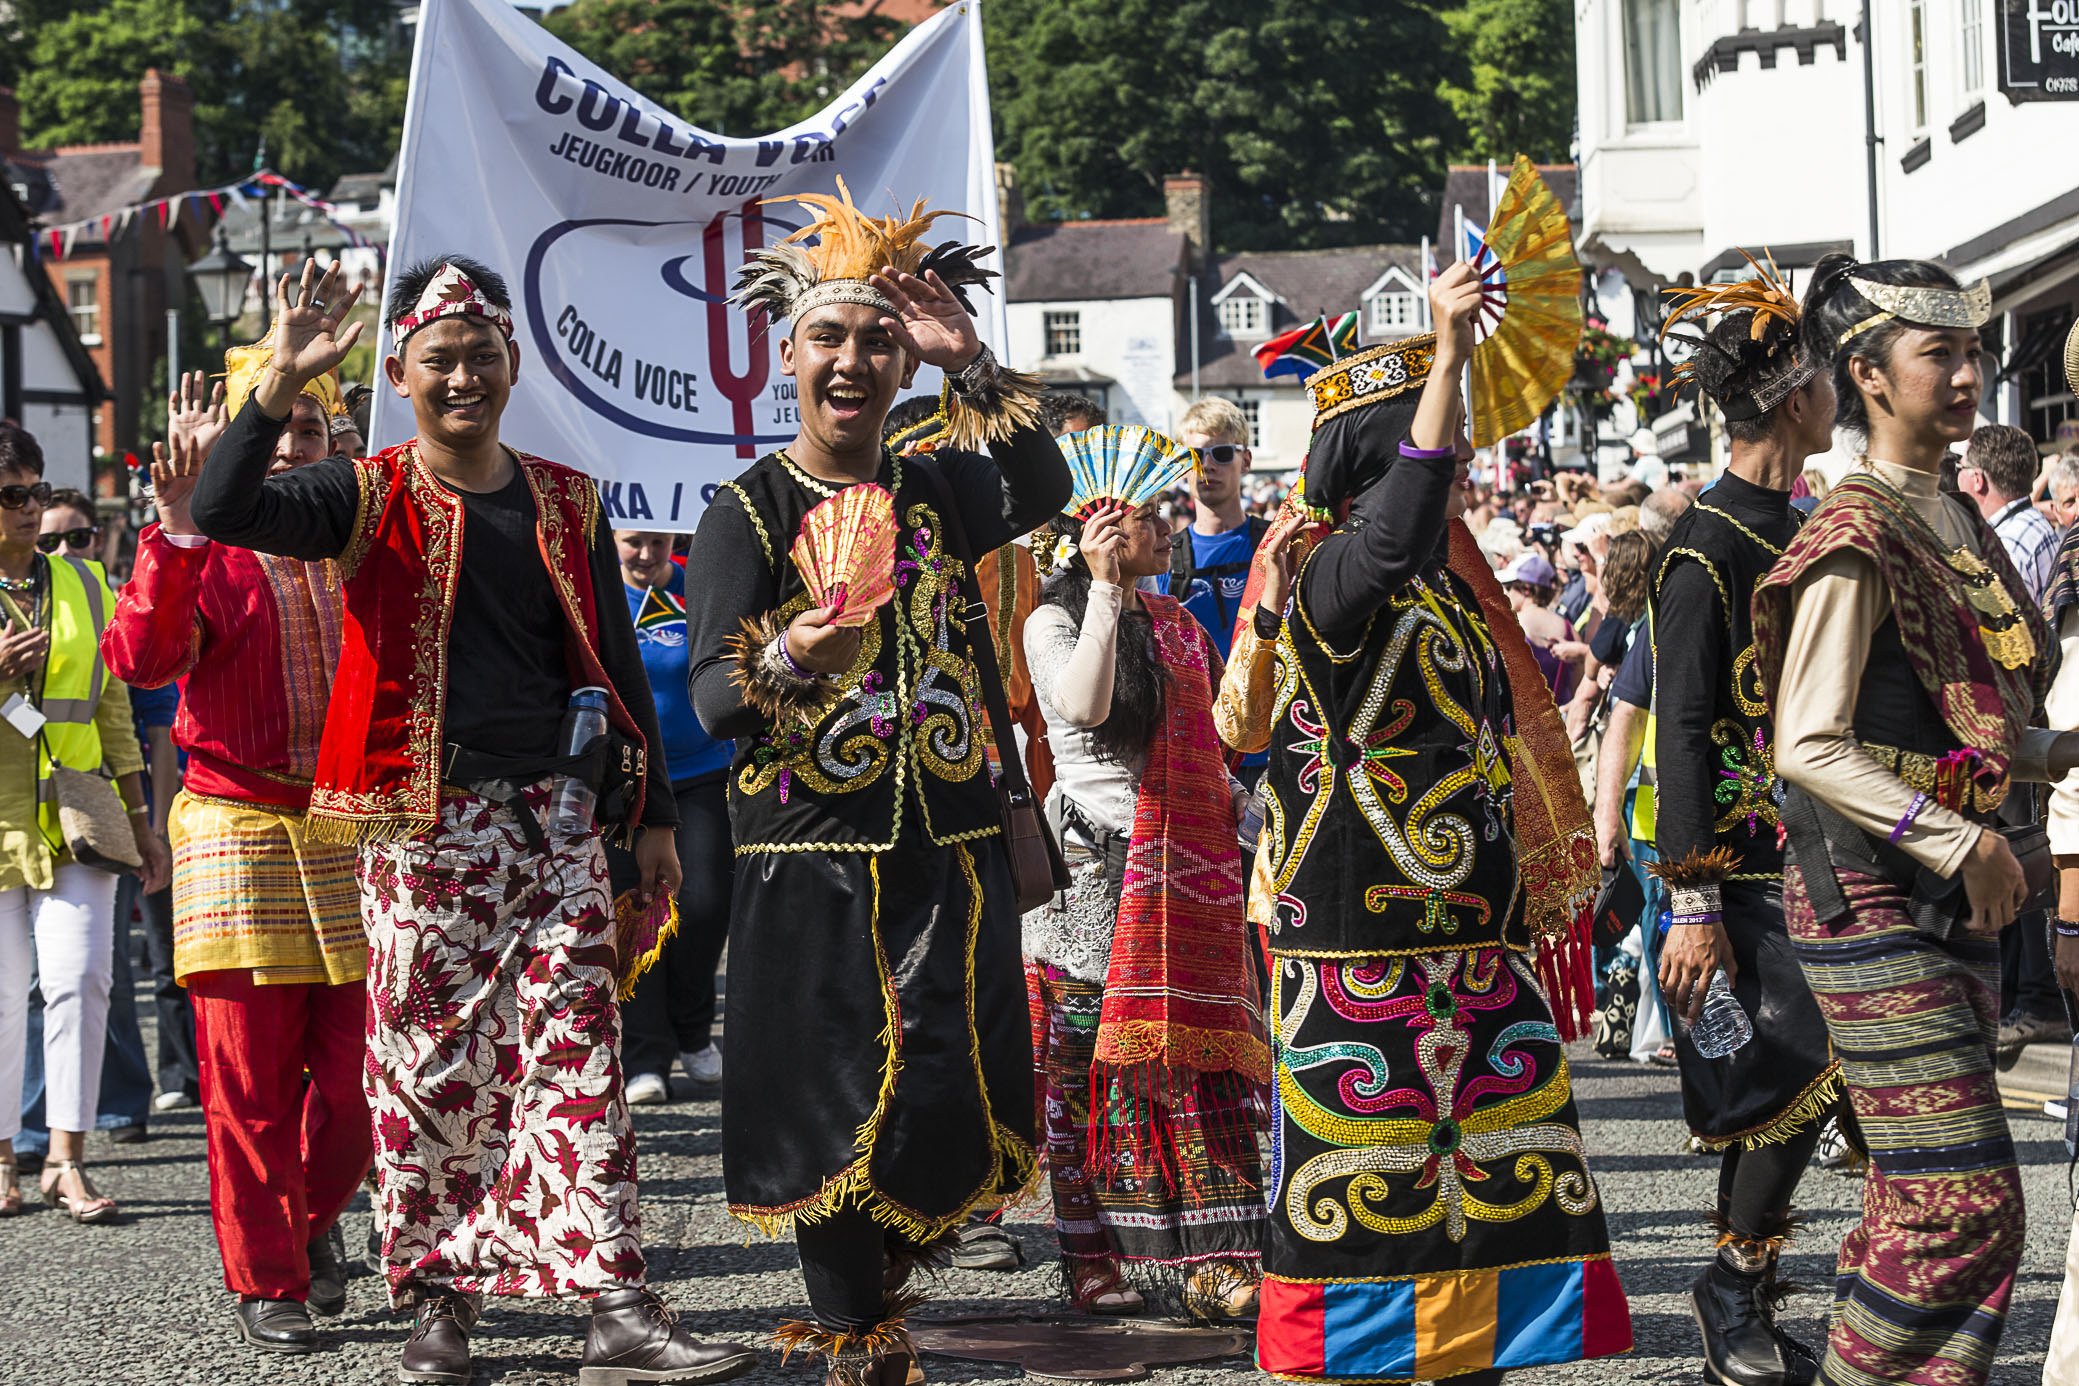 Festival boosts Llangollen economy to tune of £1.5m